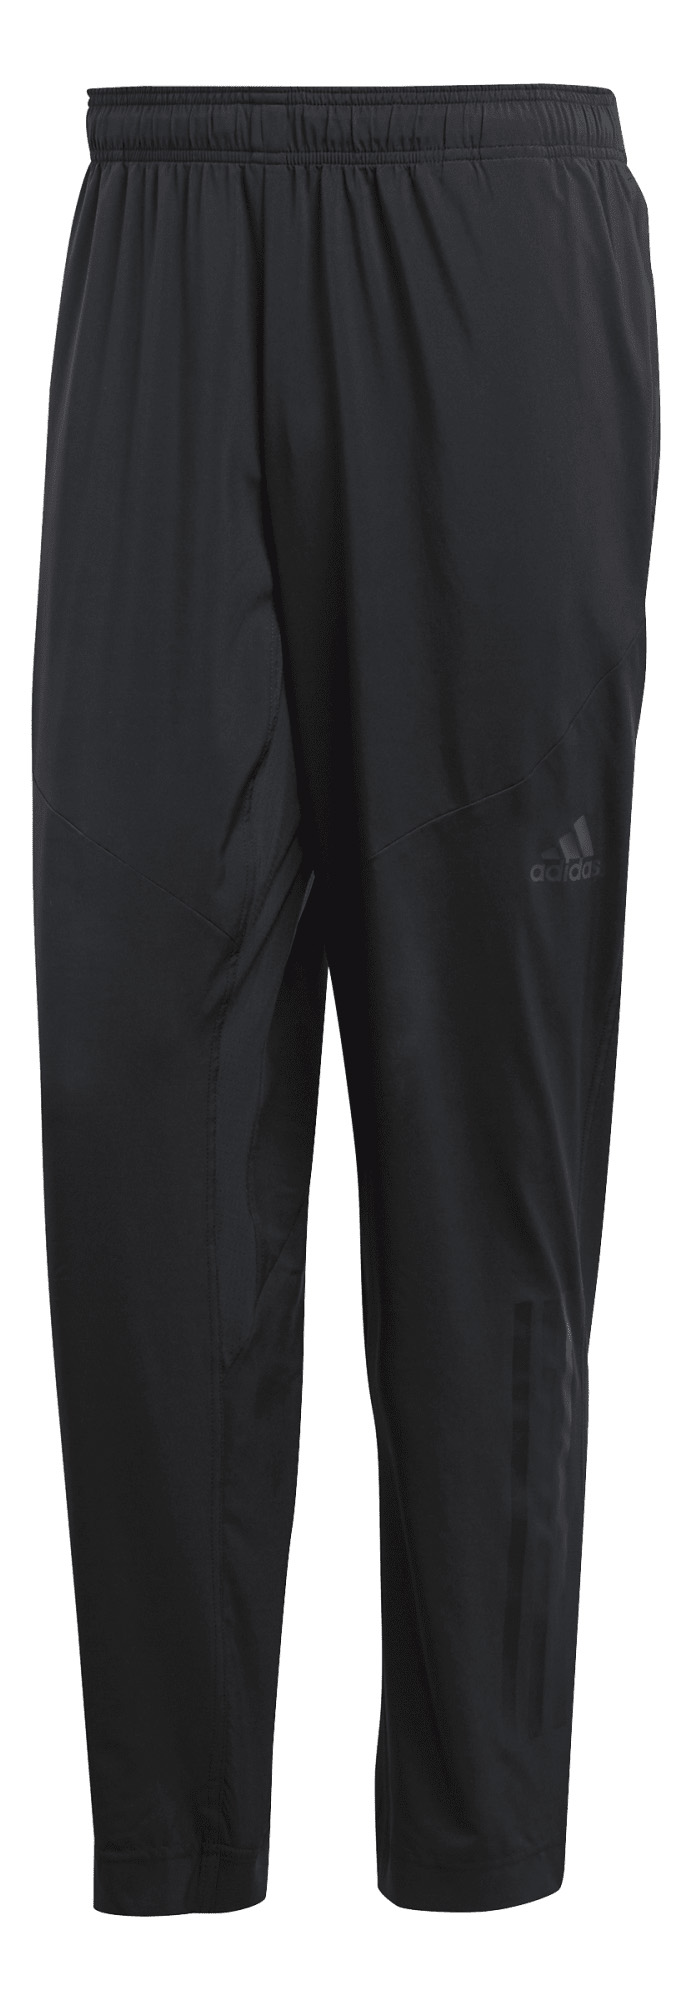 Pantaloni adidas Sportswear Workout Pant Climacool spodnie 506 S